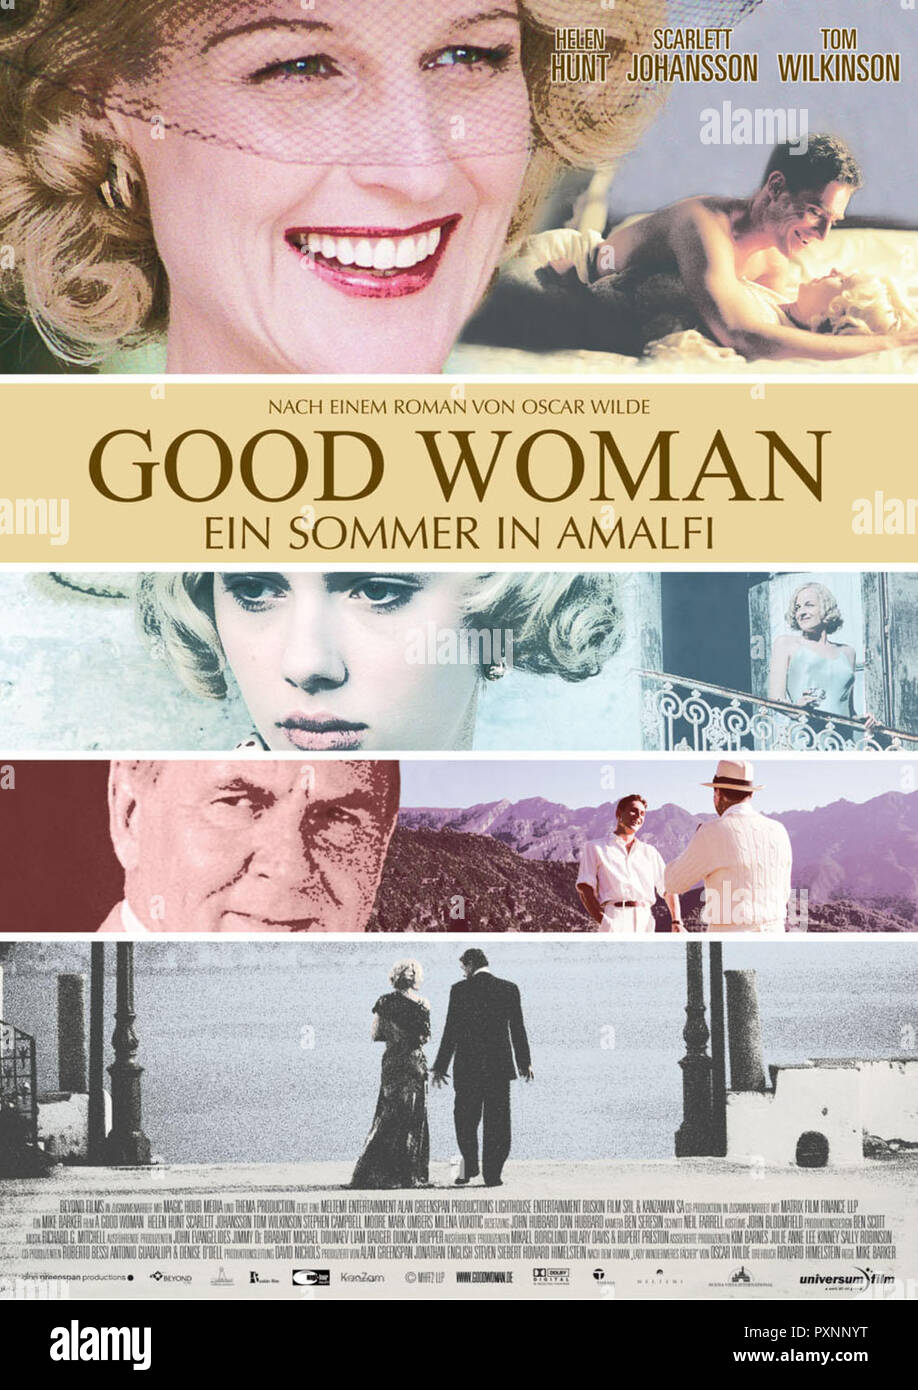 Filmplakat - Good Woman - Ein Sommer in Amalfi aka. A Good Woman, 2004 Regie: Mike Barker Darsteller: Helen Hunt, Scarlett Johansson, Tom Wilkinson Stock Photo